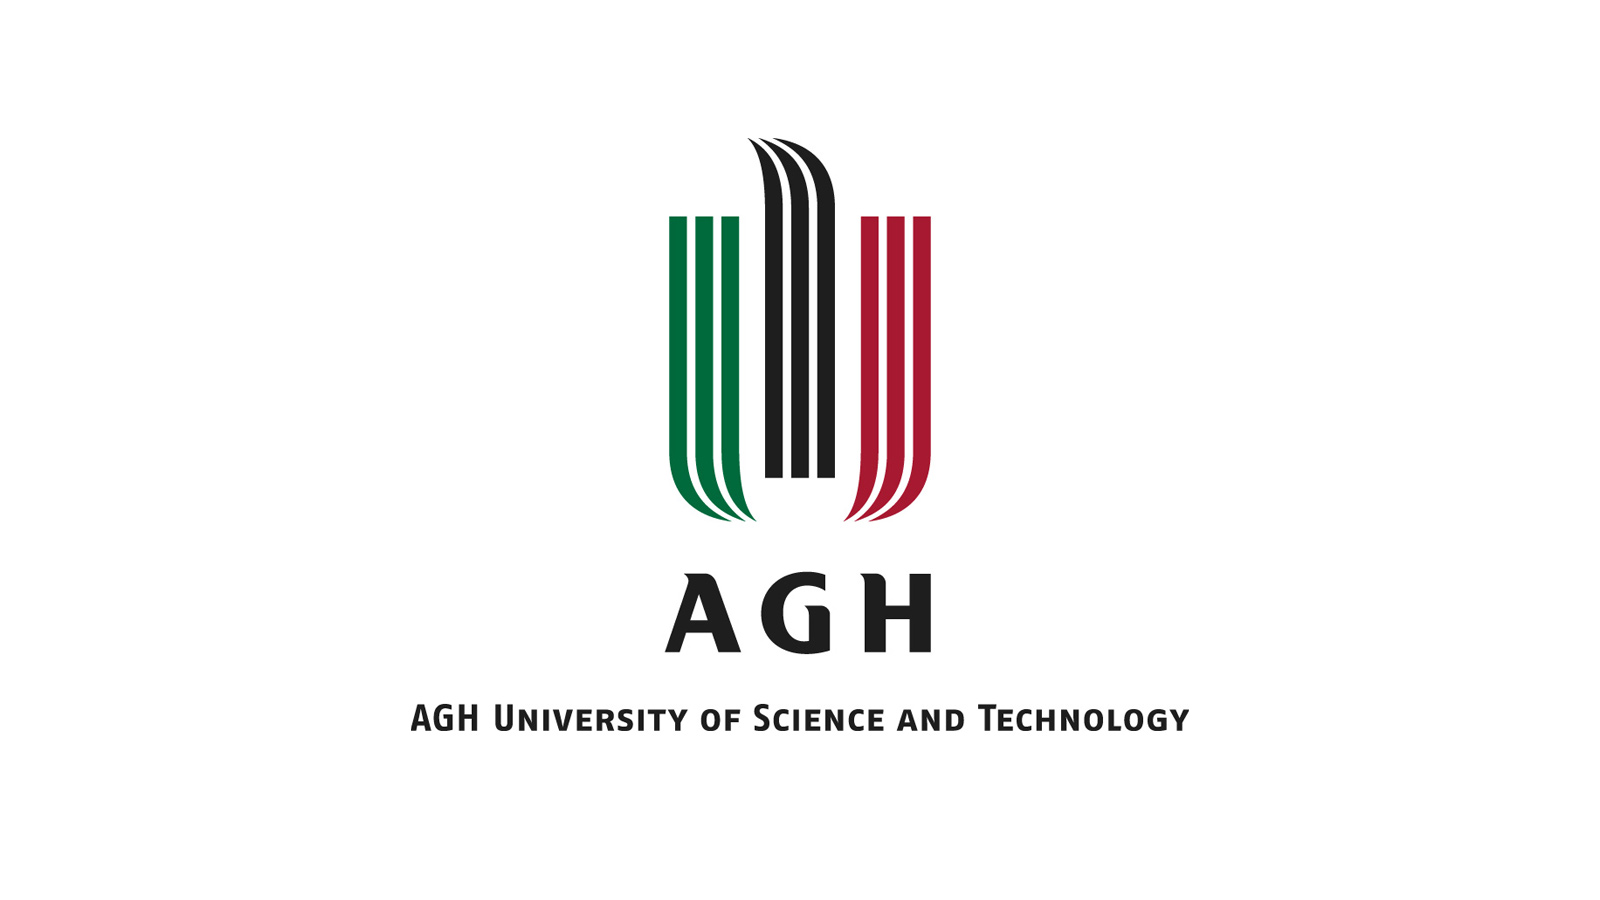 Znak graficzny AGH